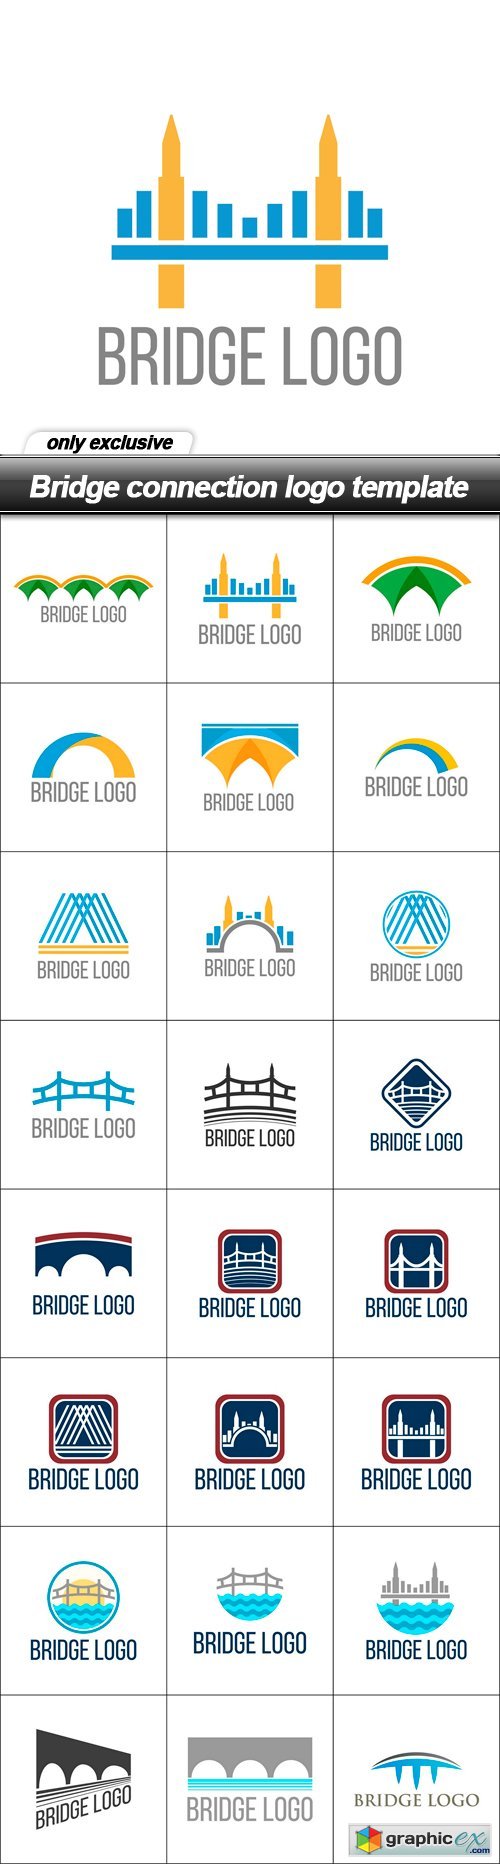 Bridge connection logo template - 25 EPS